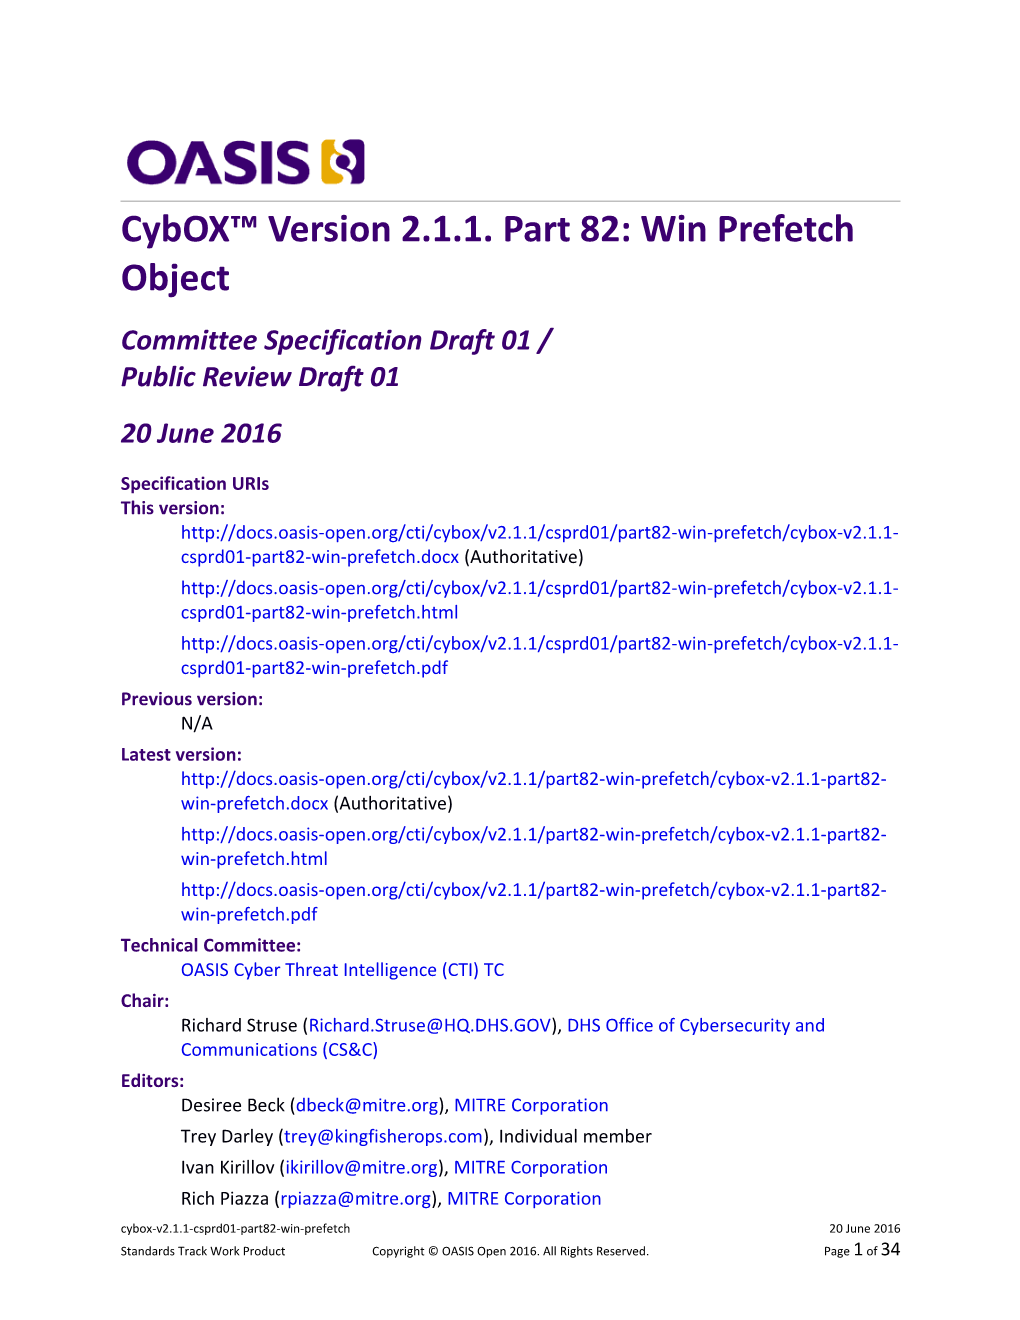 Cybox Version 2.1.1. Part 82: Win Prefetch Object